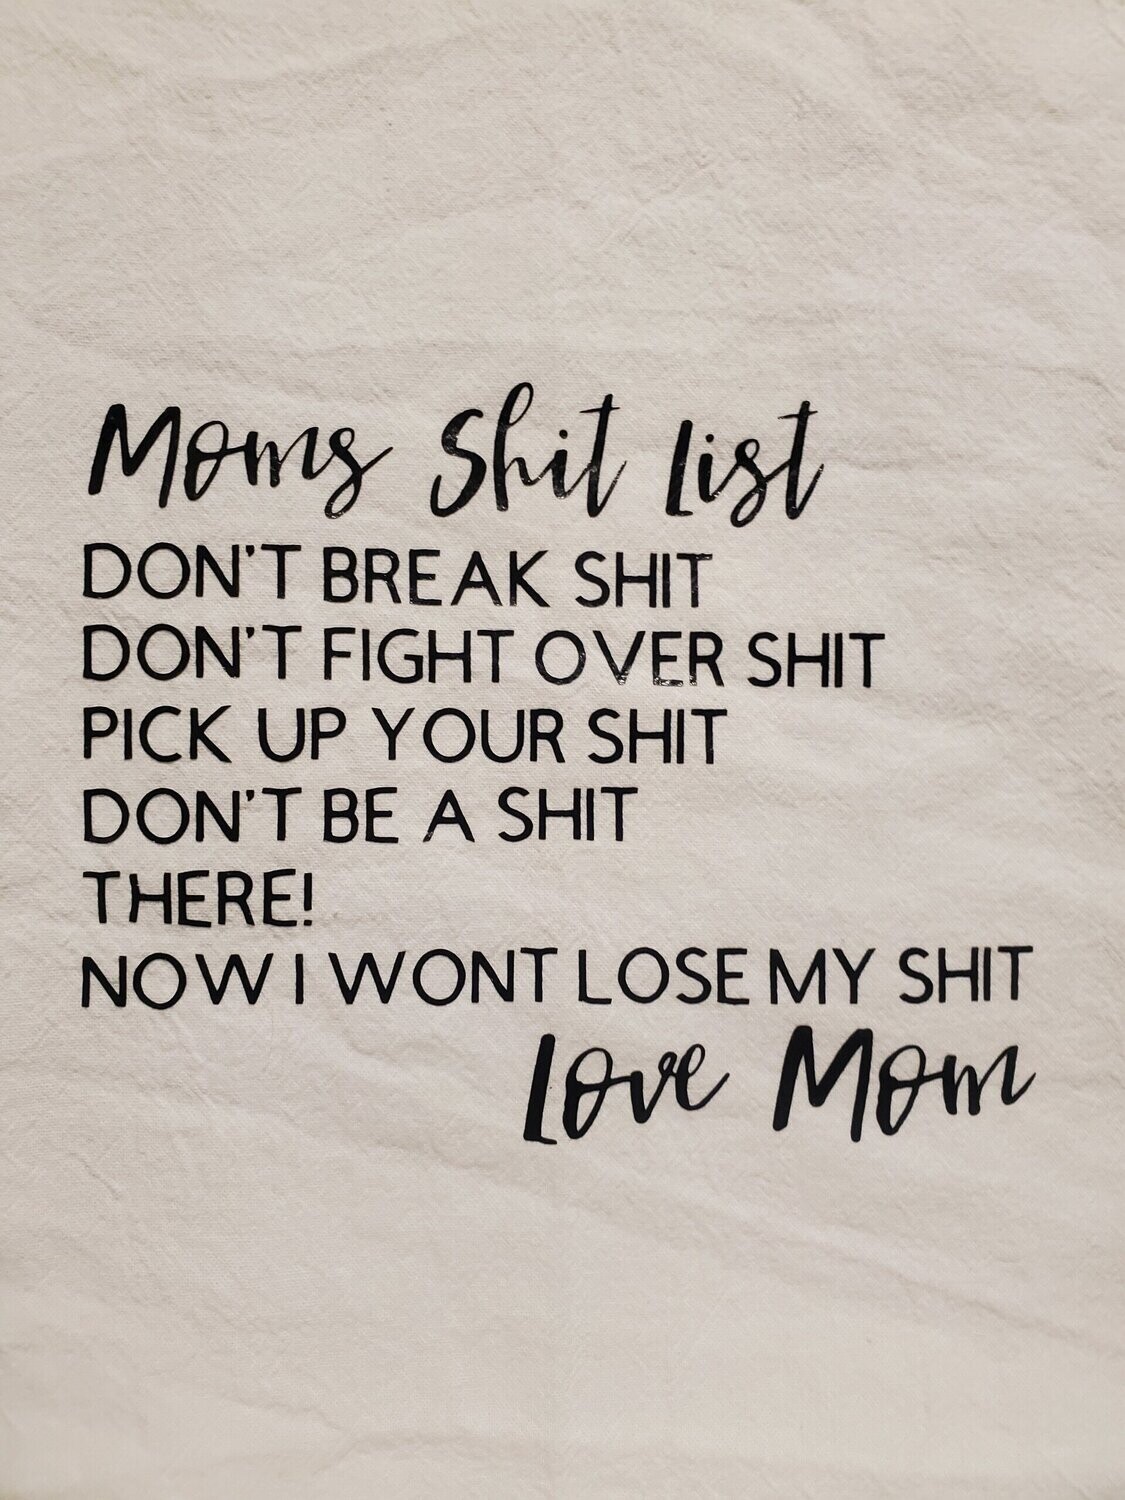 MOMS SHIT LIST